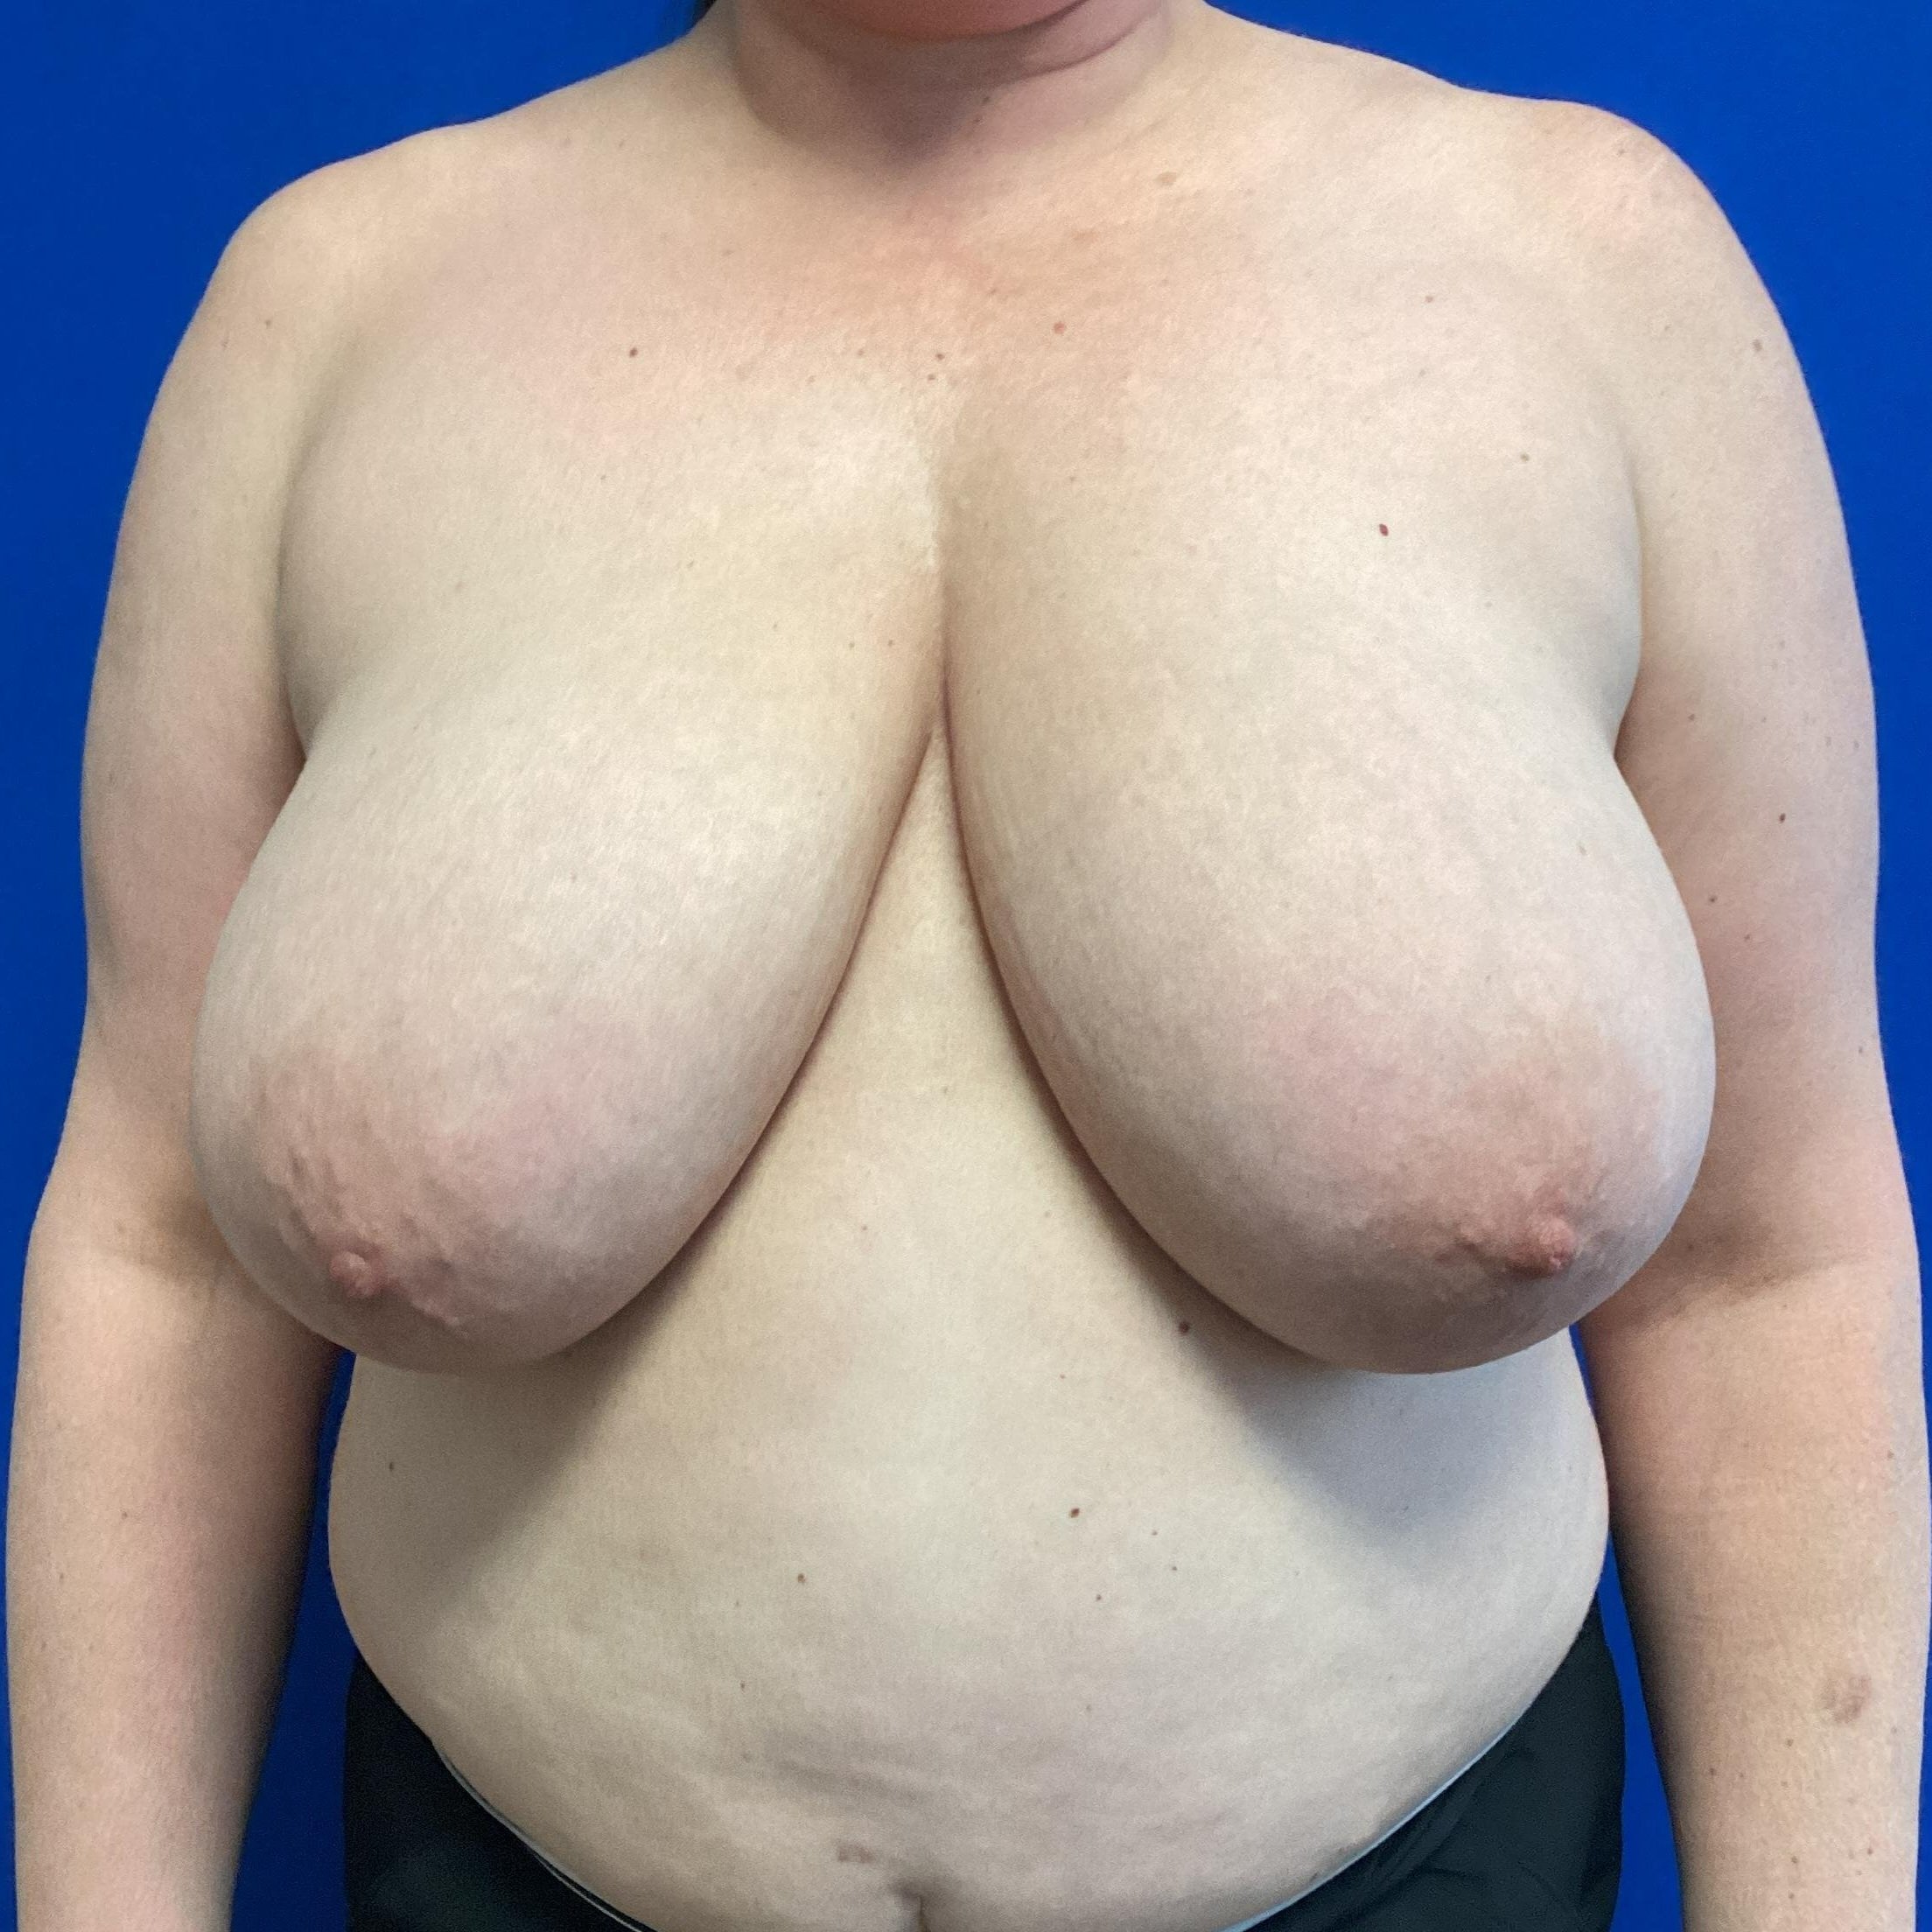 bilateral+breast+reduction+before.jpg